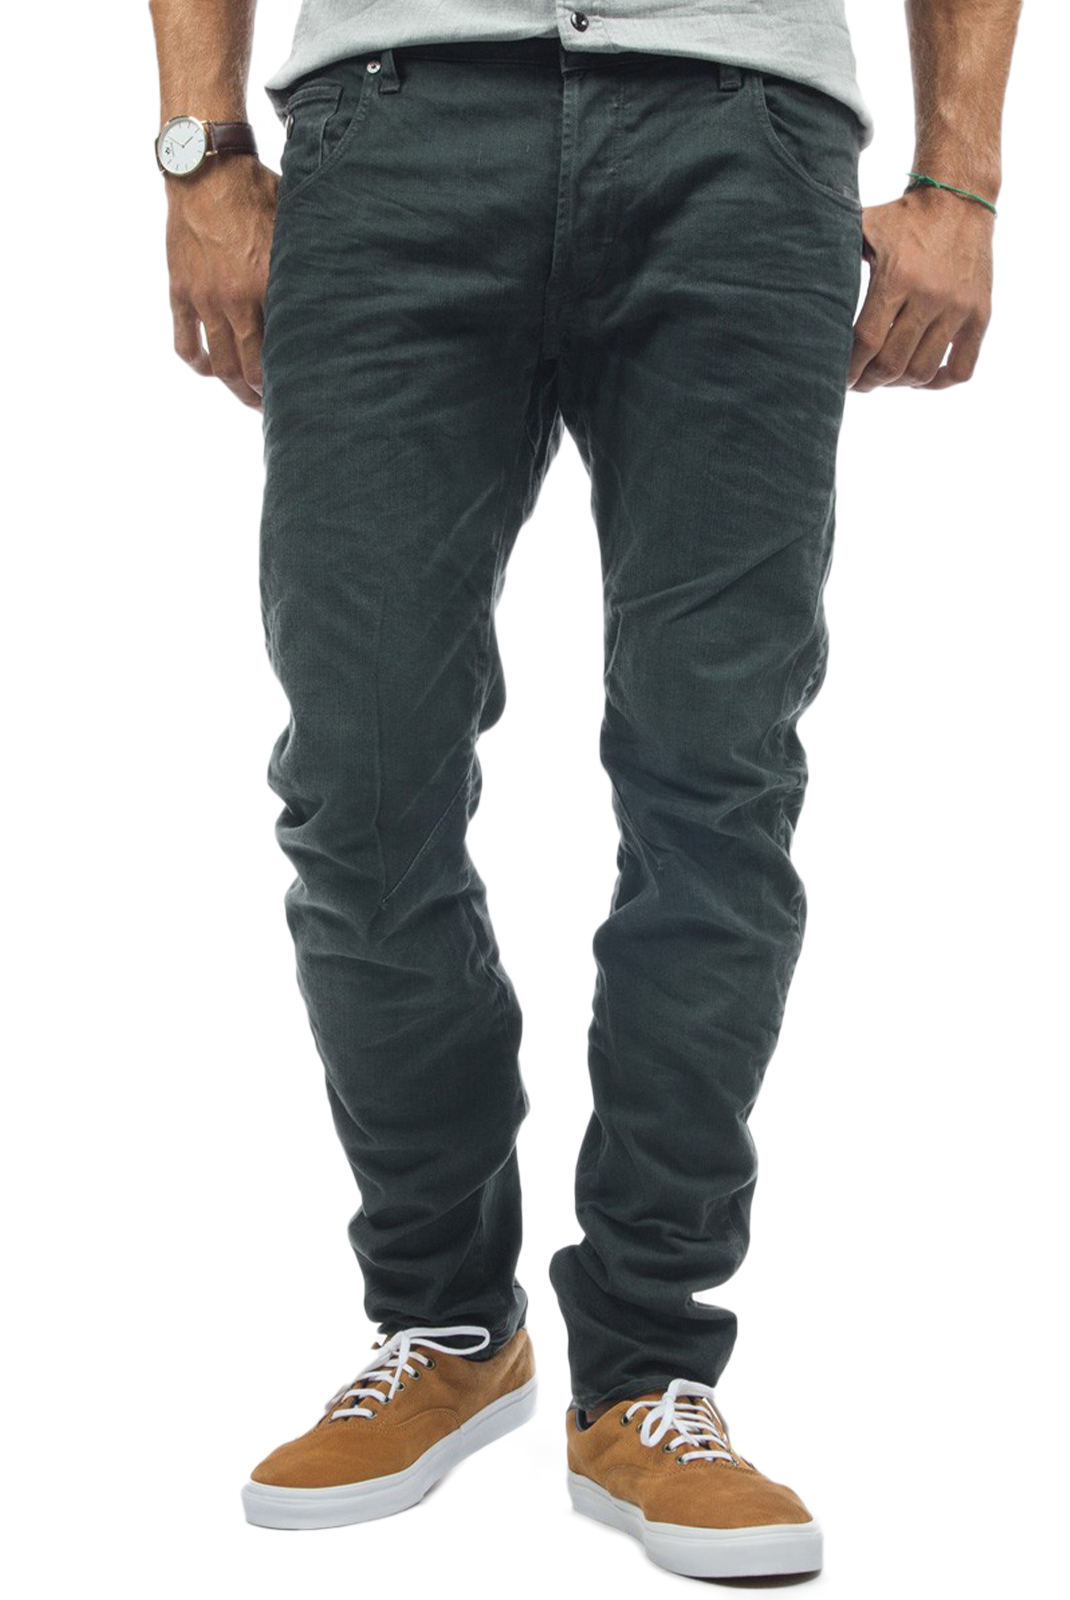 G-star Jeans Vert Denim Slim 51030f-5633-4504 Arc